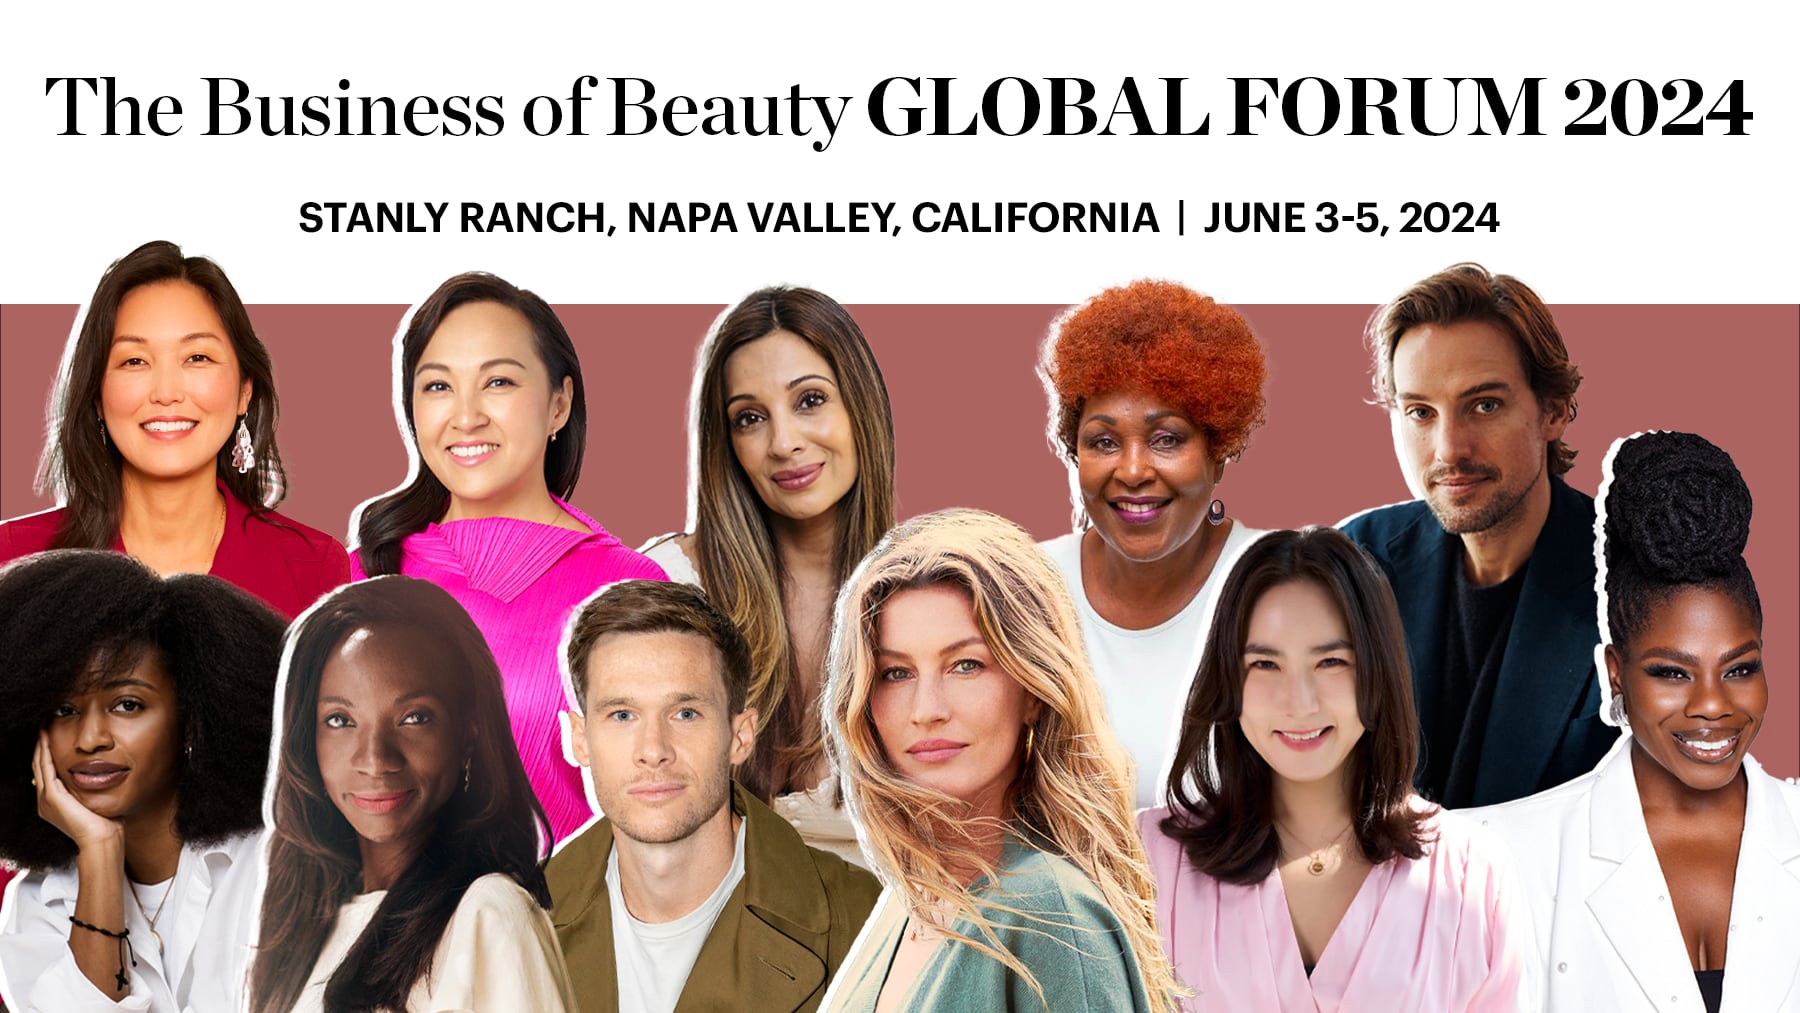 Gisele Bündchen, Heela Yang and Danessa Myricks Join The Business of Beauty Global Forum 2024